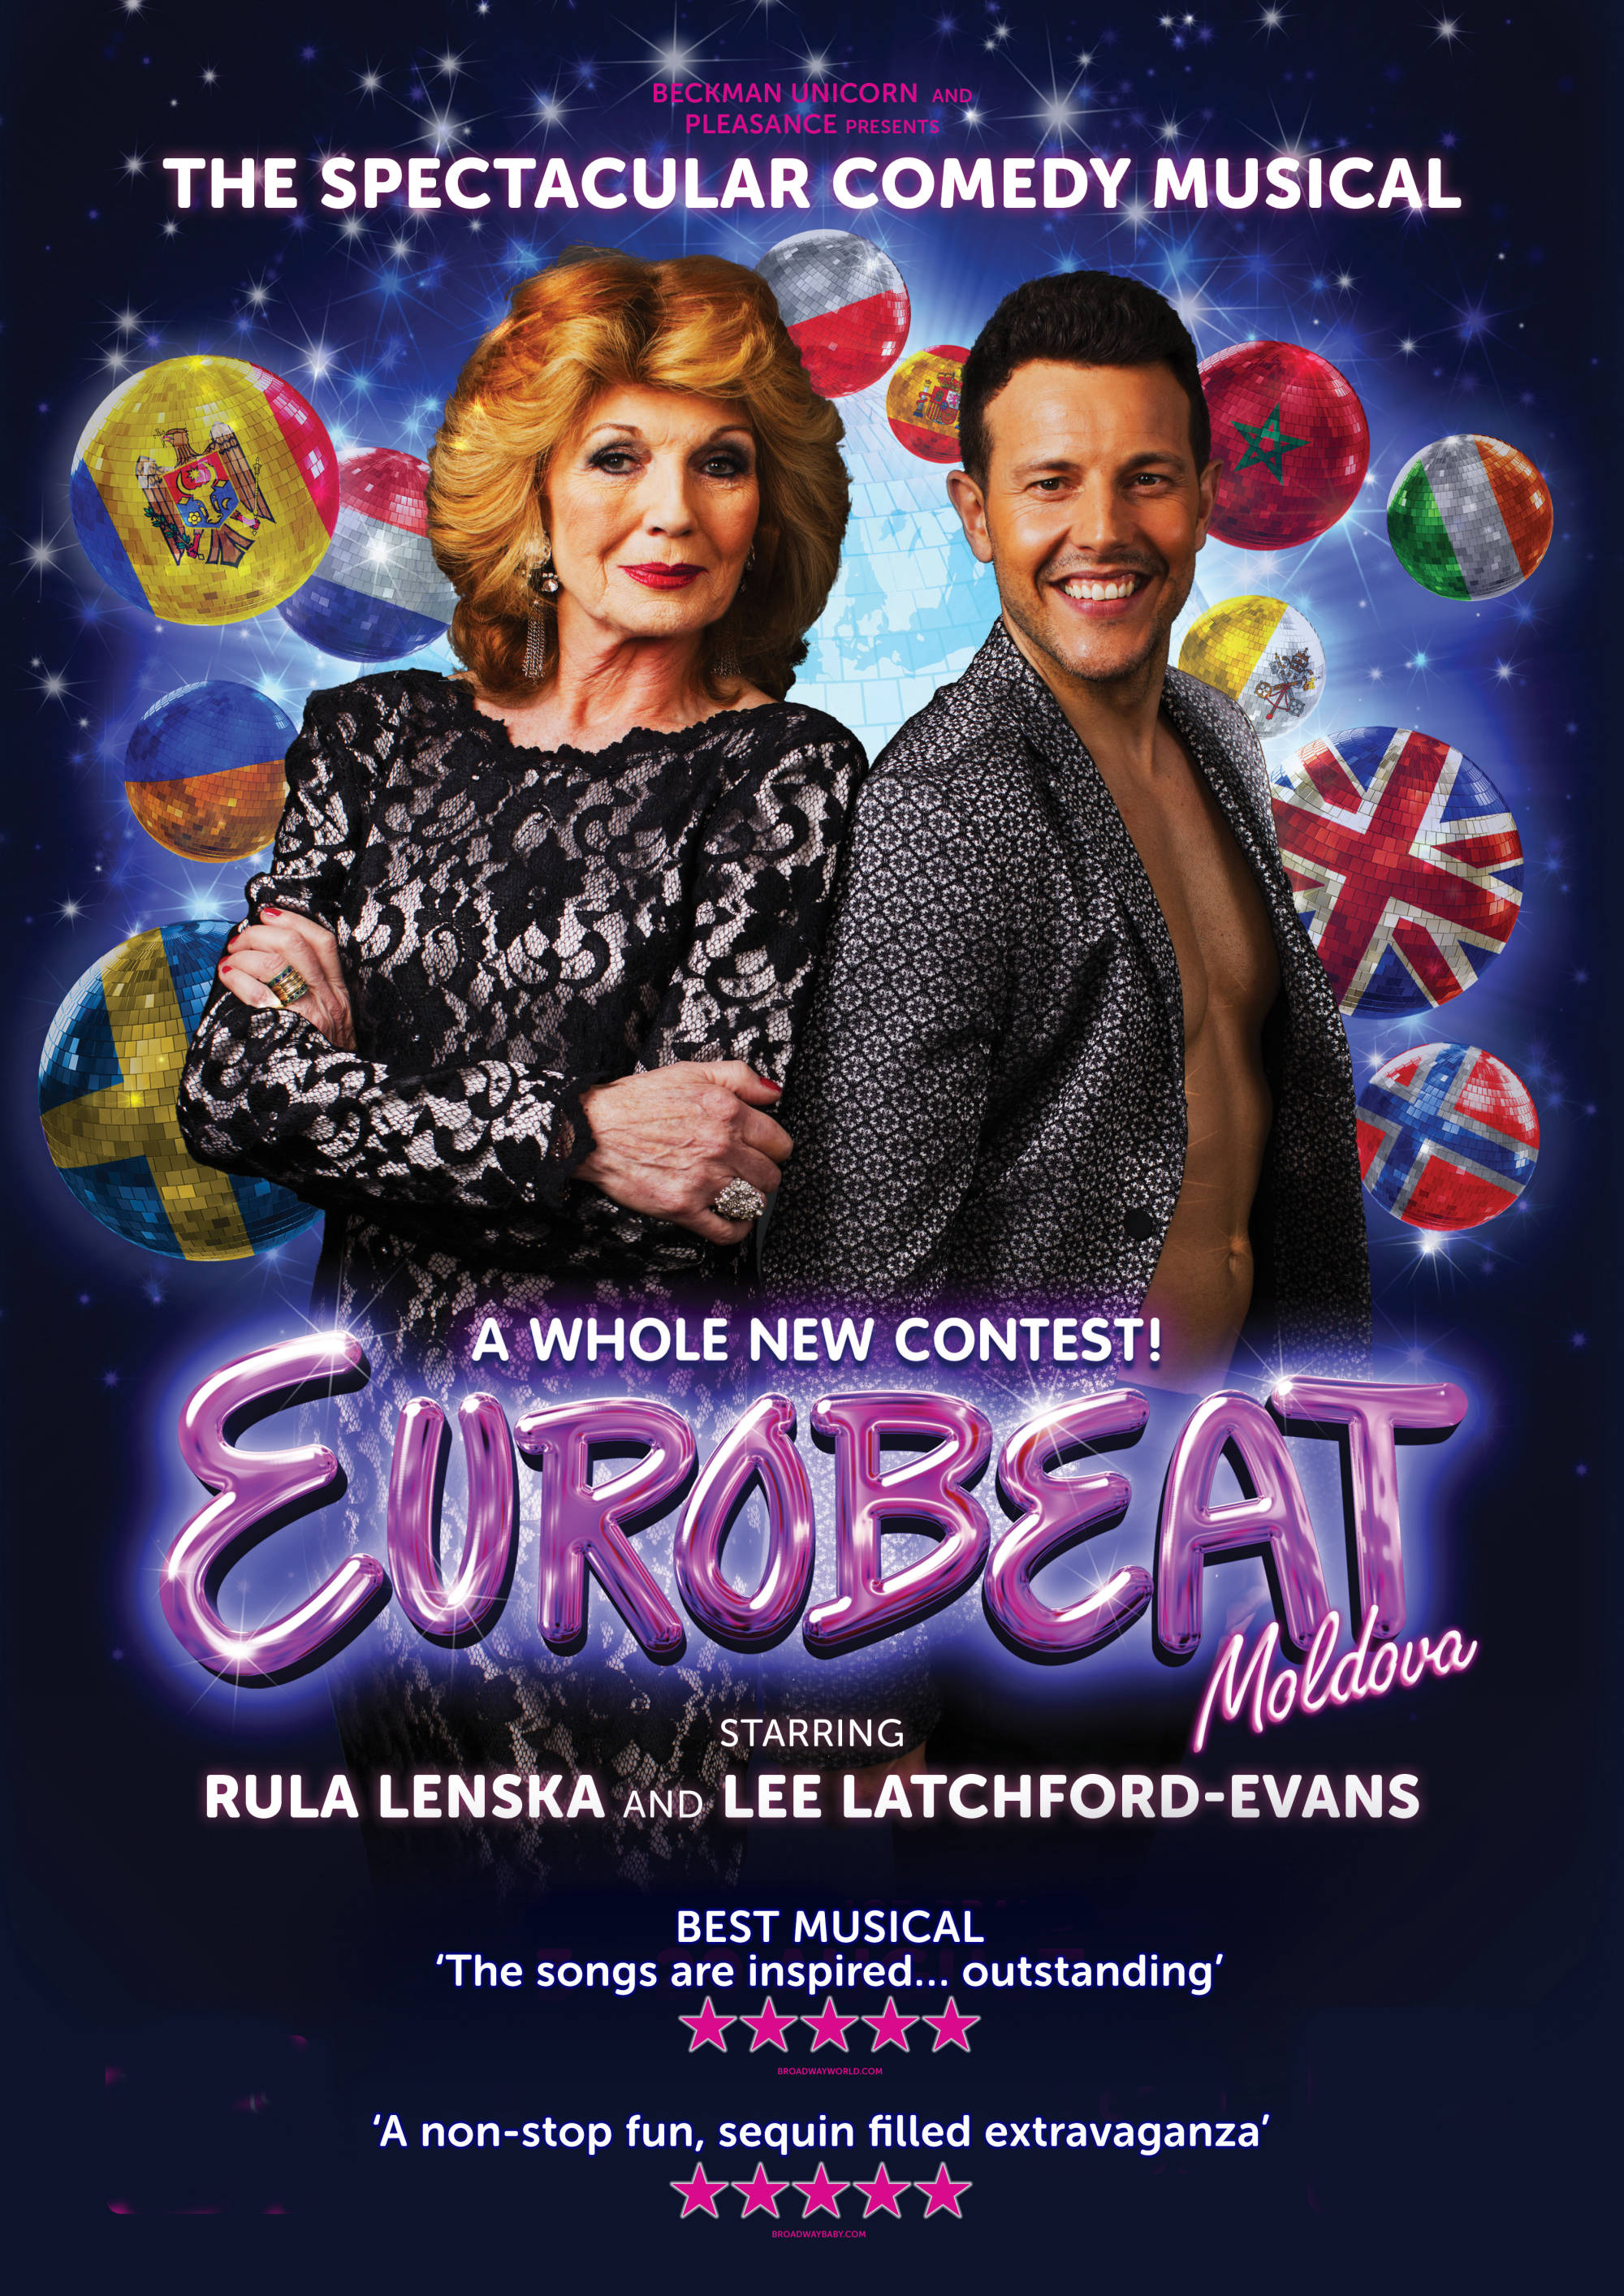 Eurobeat Moldova - Lee Latchford-Evans - Rula Lenska - Beckman Unicorn